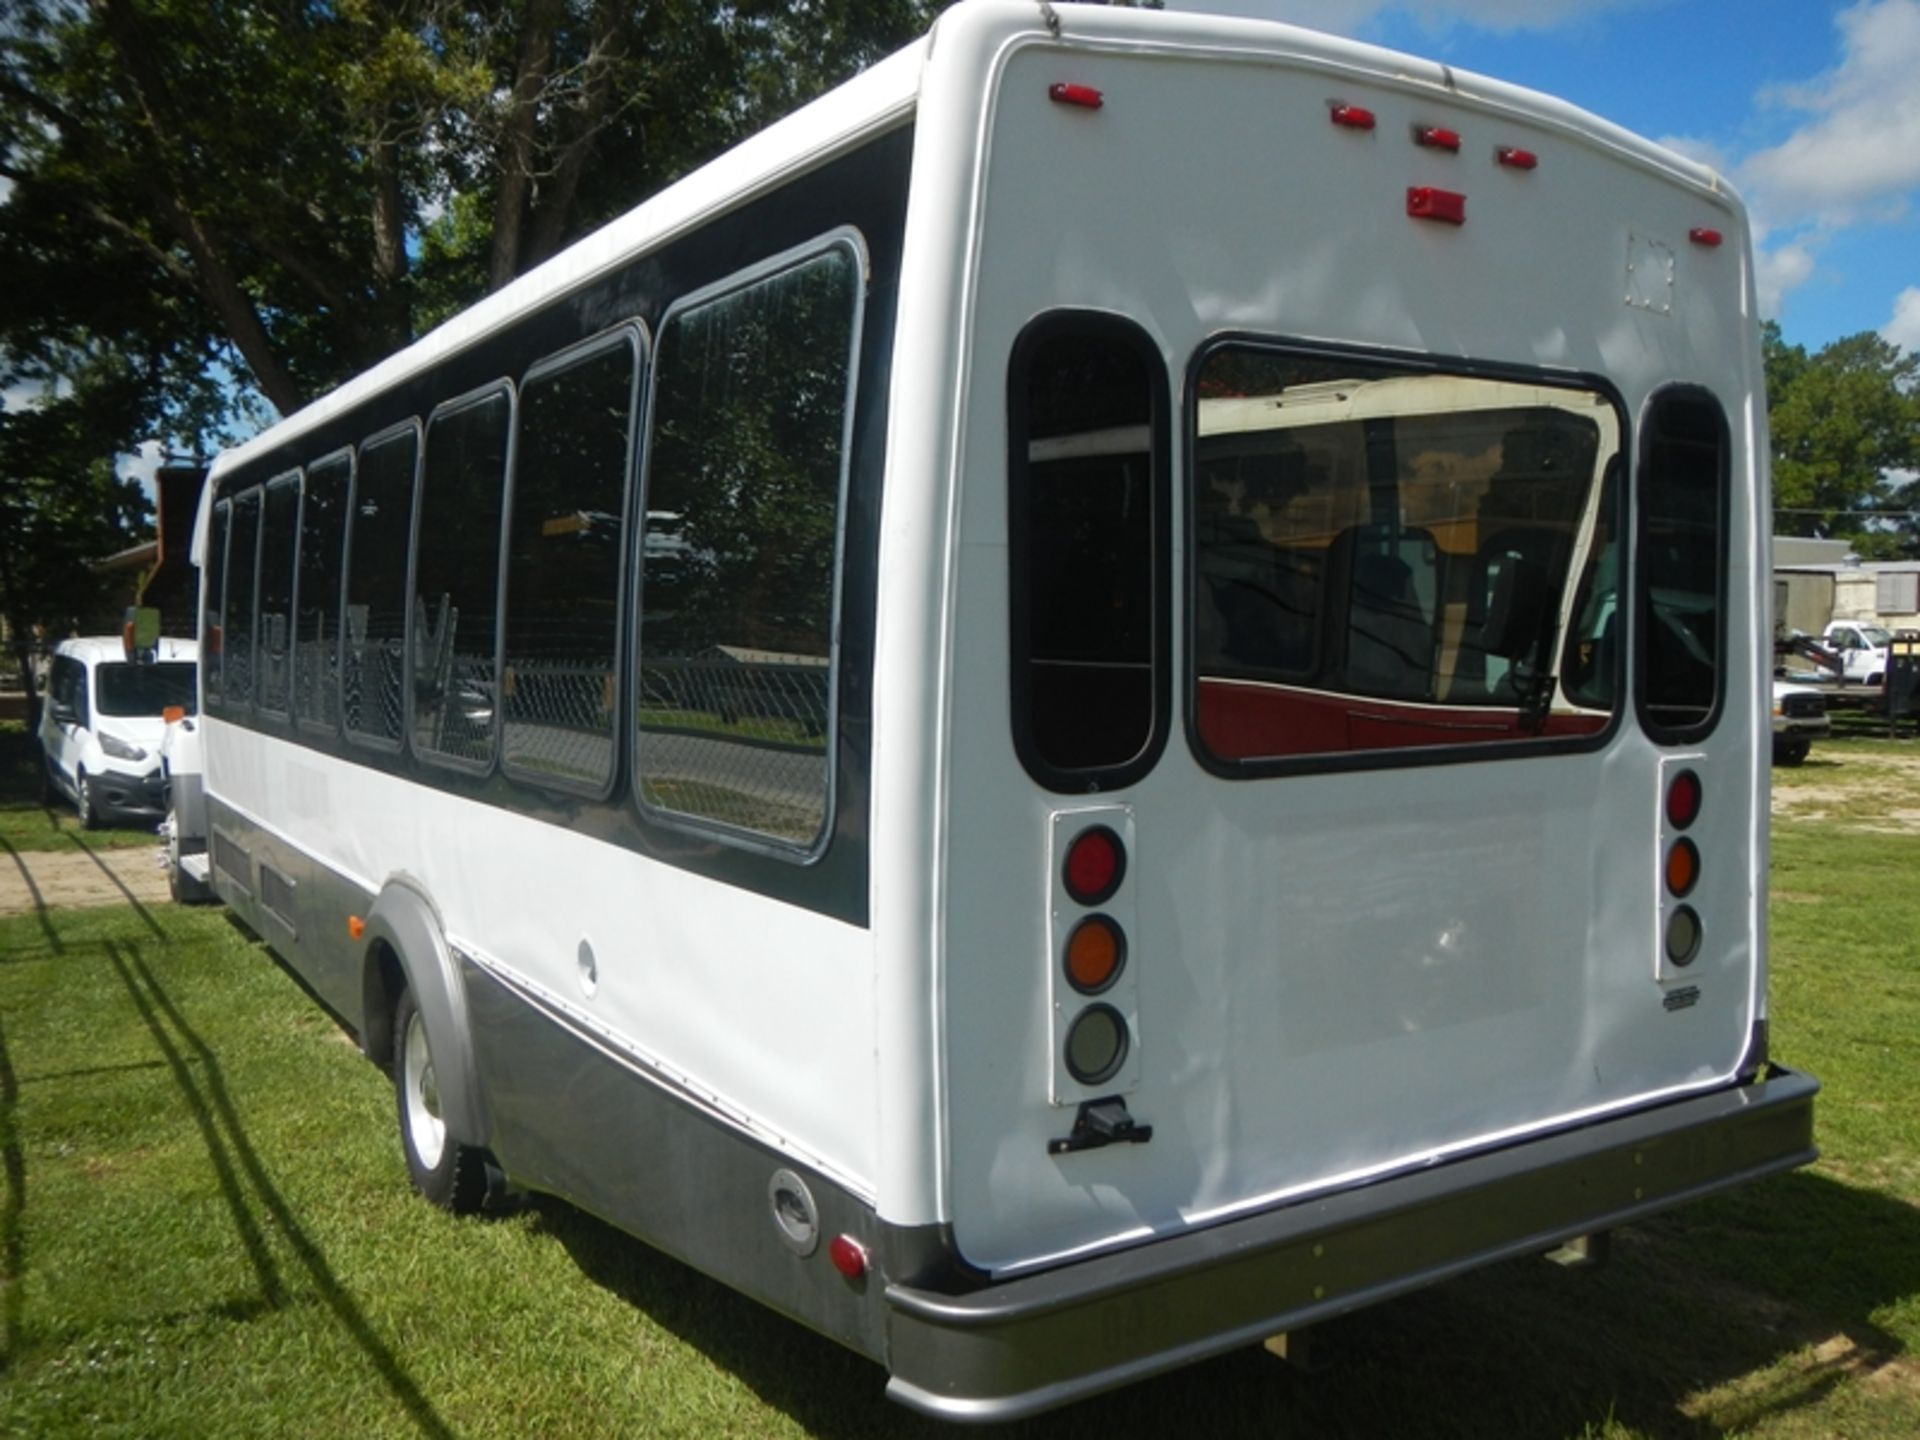 2006 CHEVROLET C5500 40 passenger bus Duramax auto trans - 162,073 miles - VIN: 1GBG5V1256F428122 - Image 4 of 7